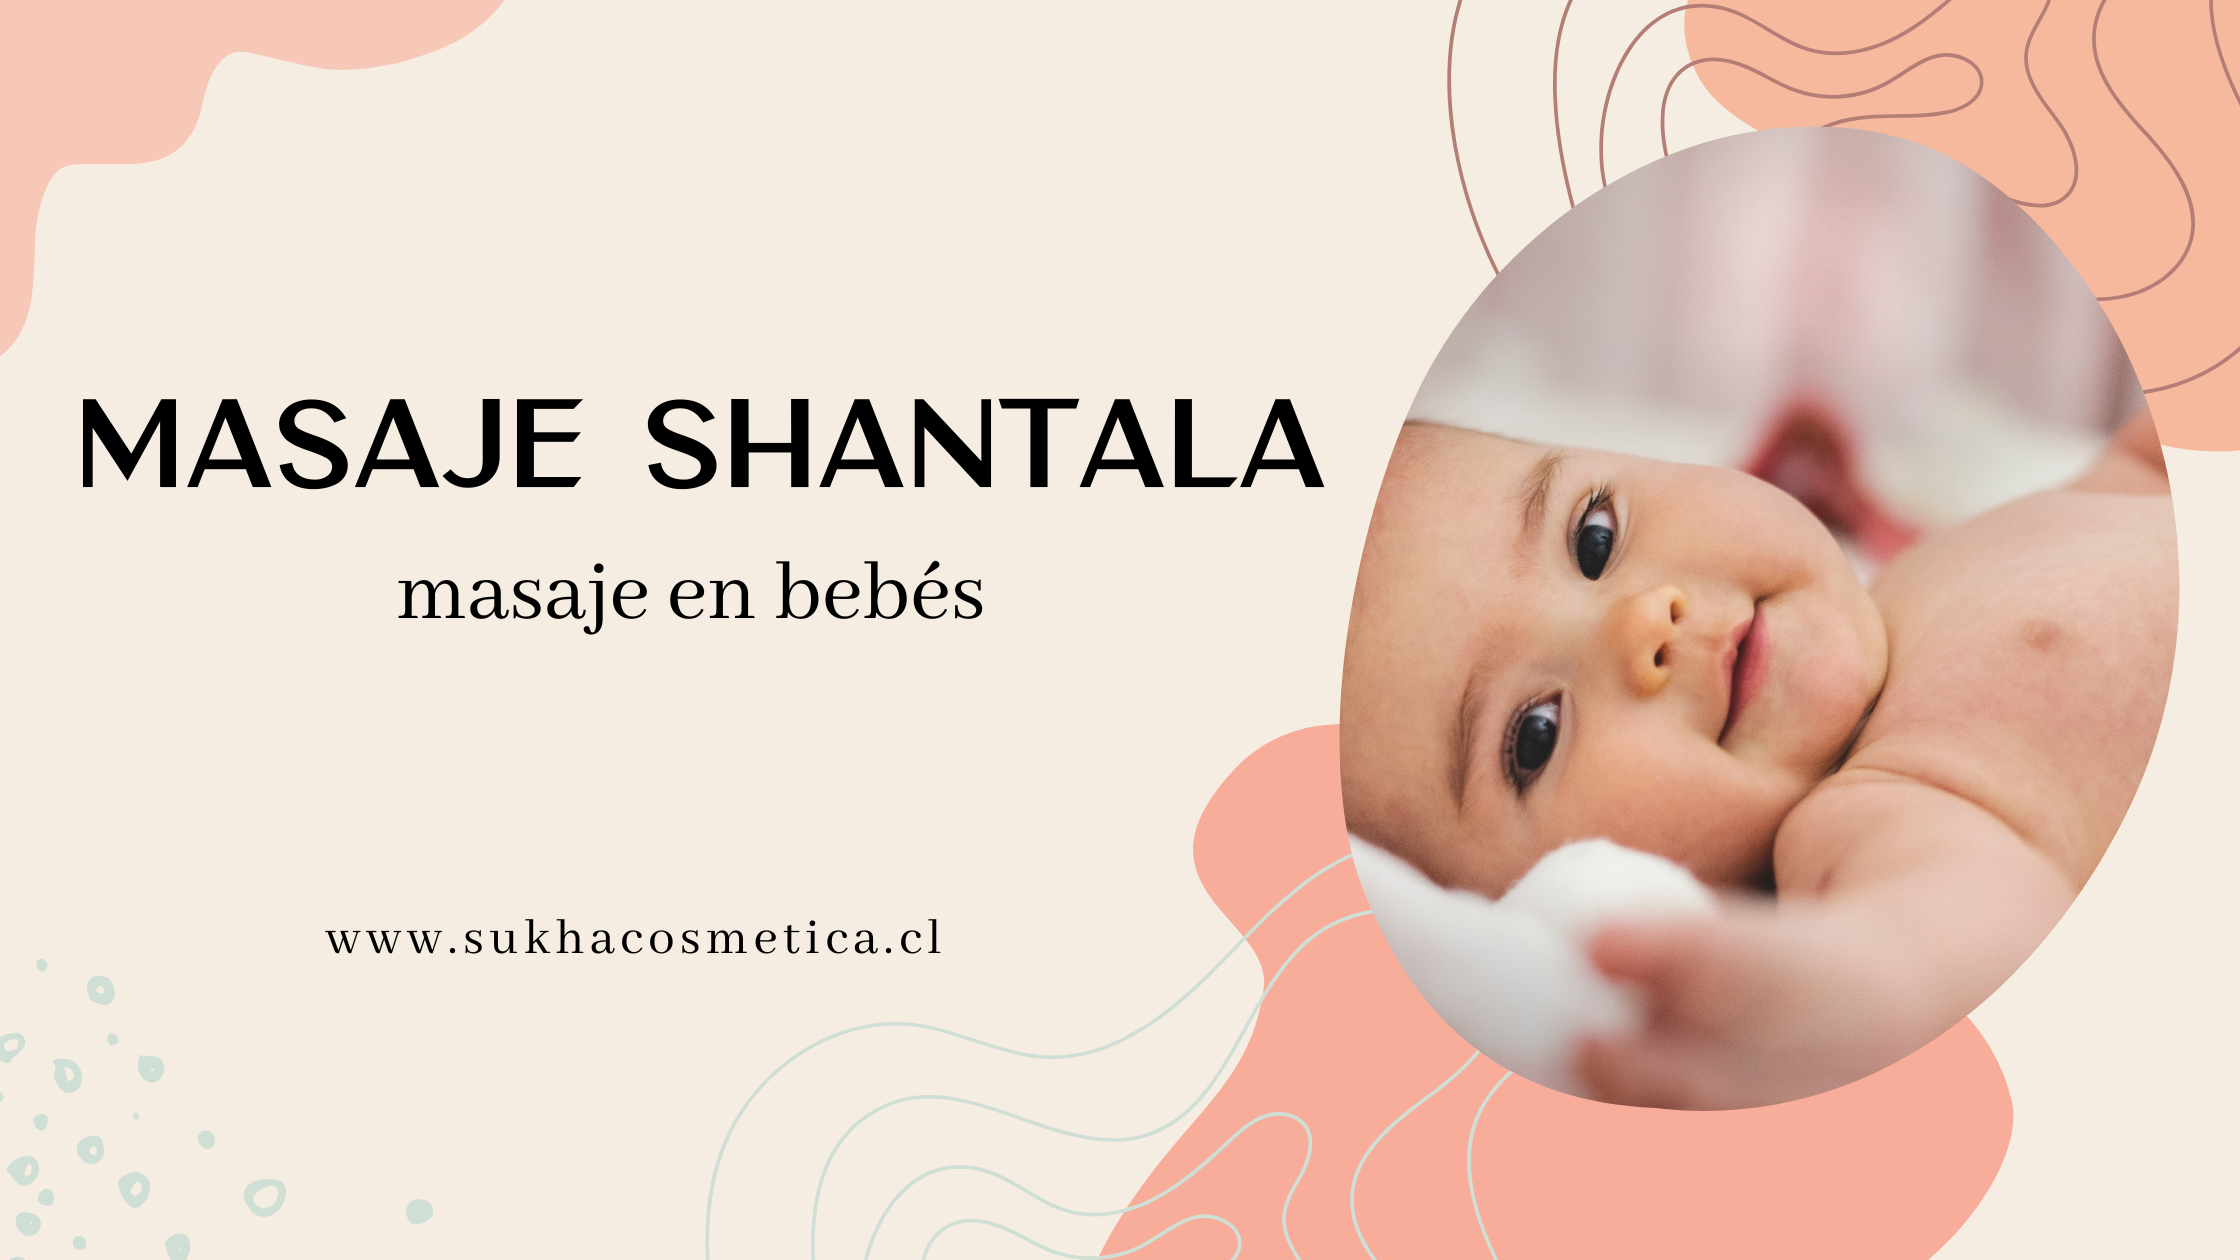 Masaje Shantala (masaje en bebés)